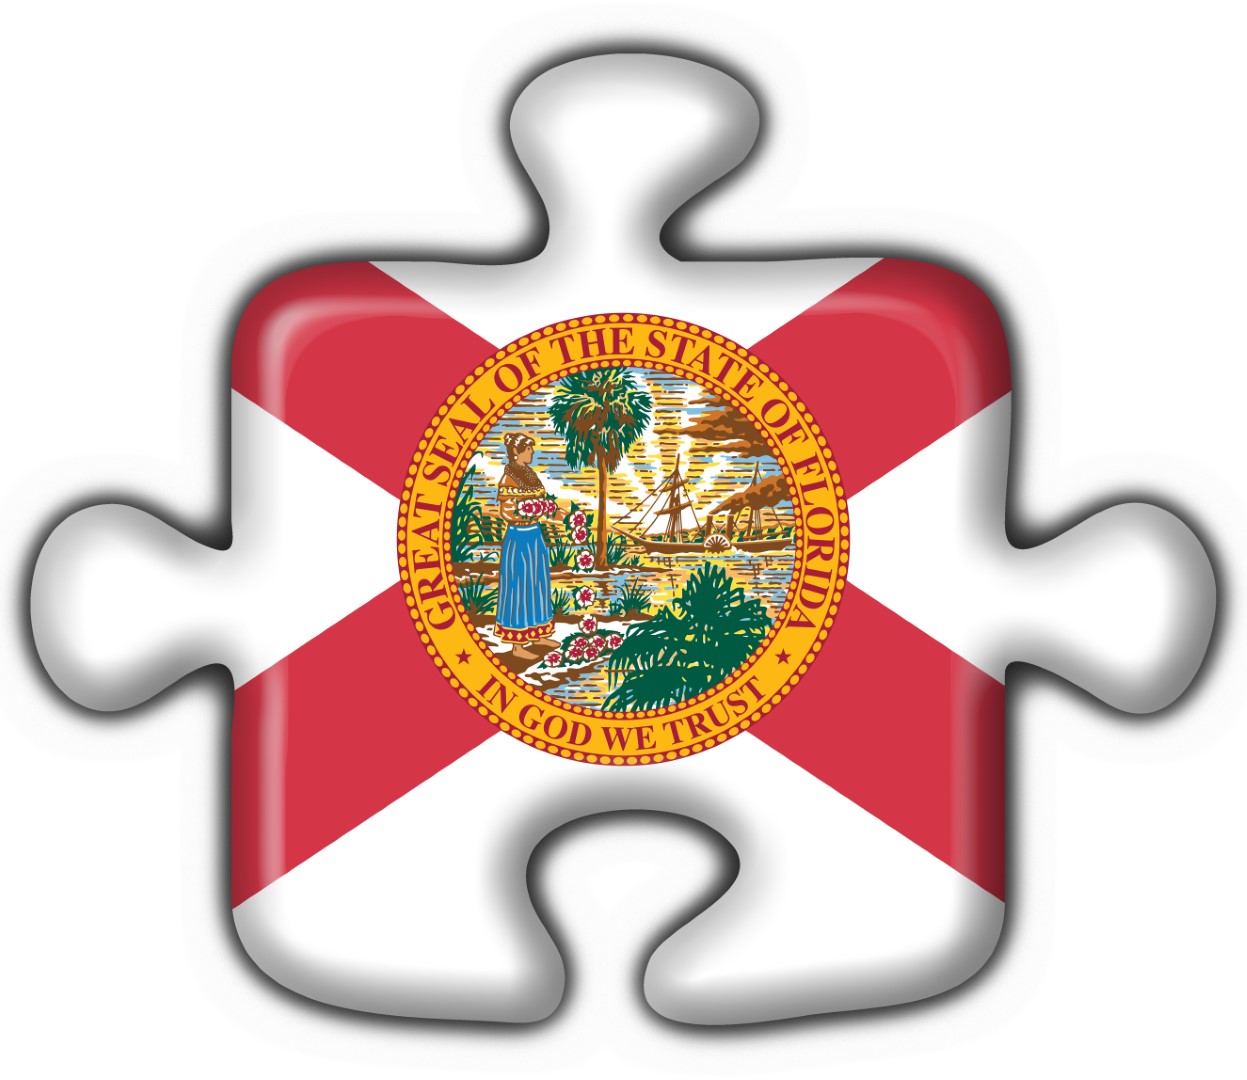 Florida (USA State) button flag puzzle shape